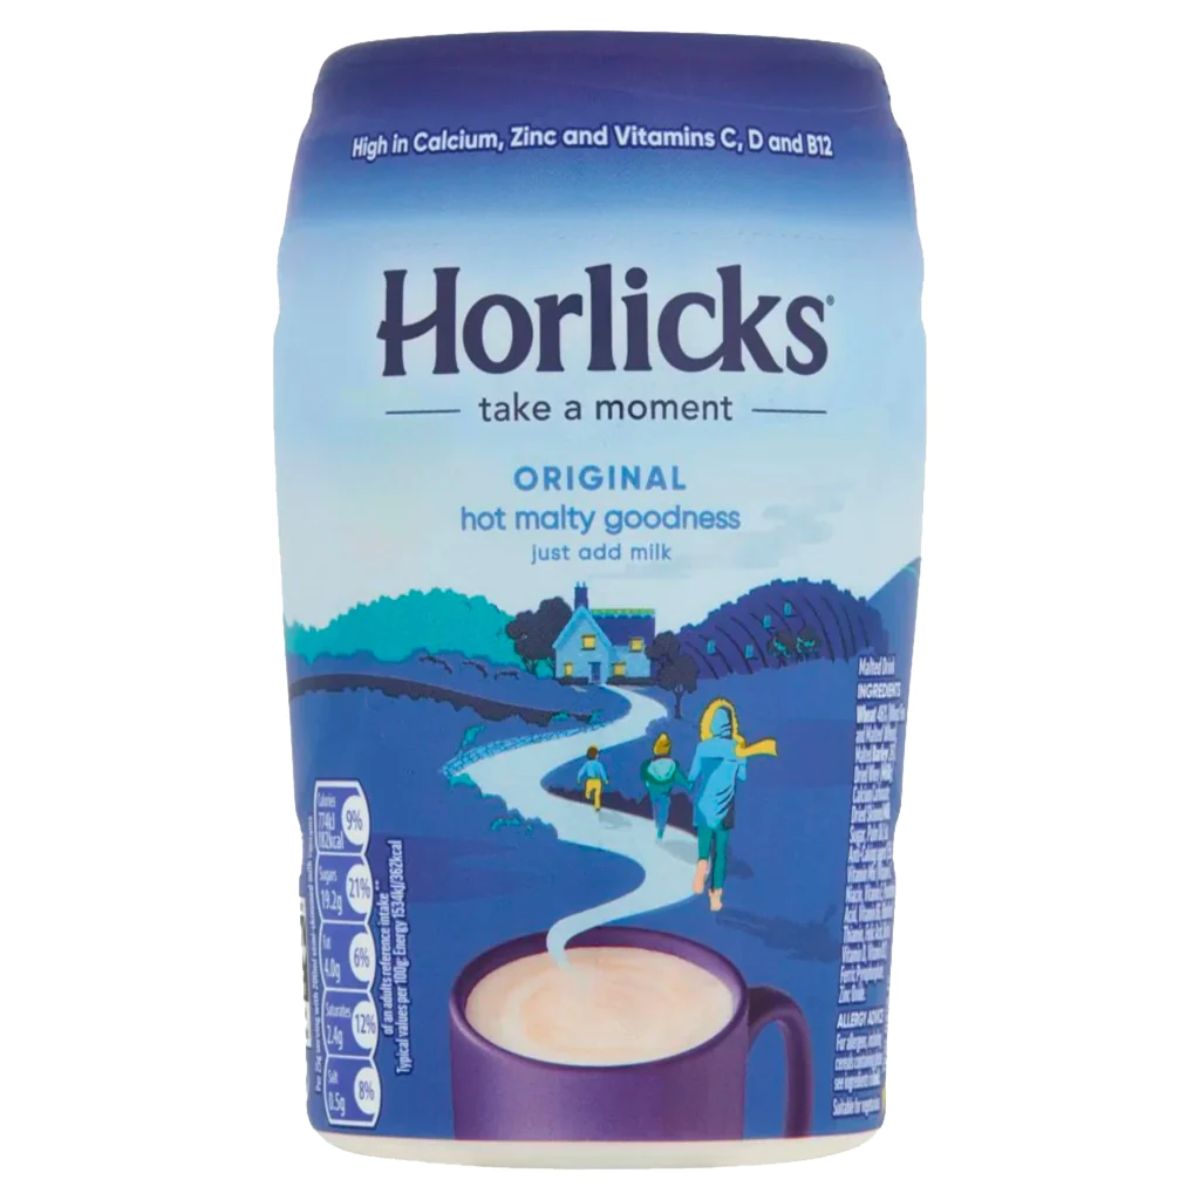 Horlicks - Original Hot malty Goodness - 270g take a moment milk tea.